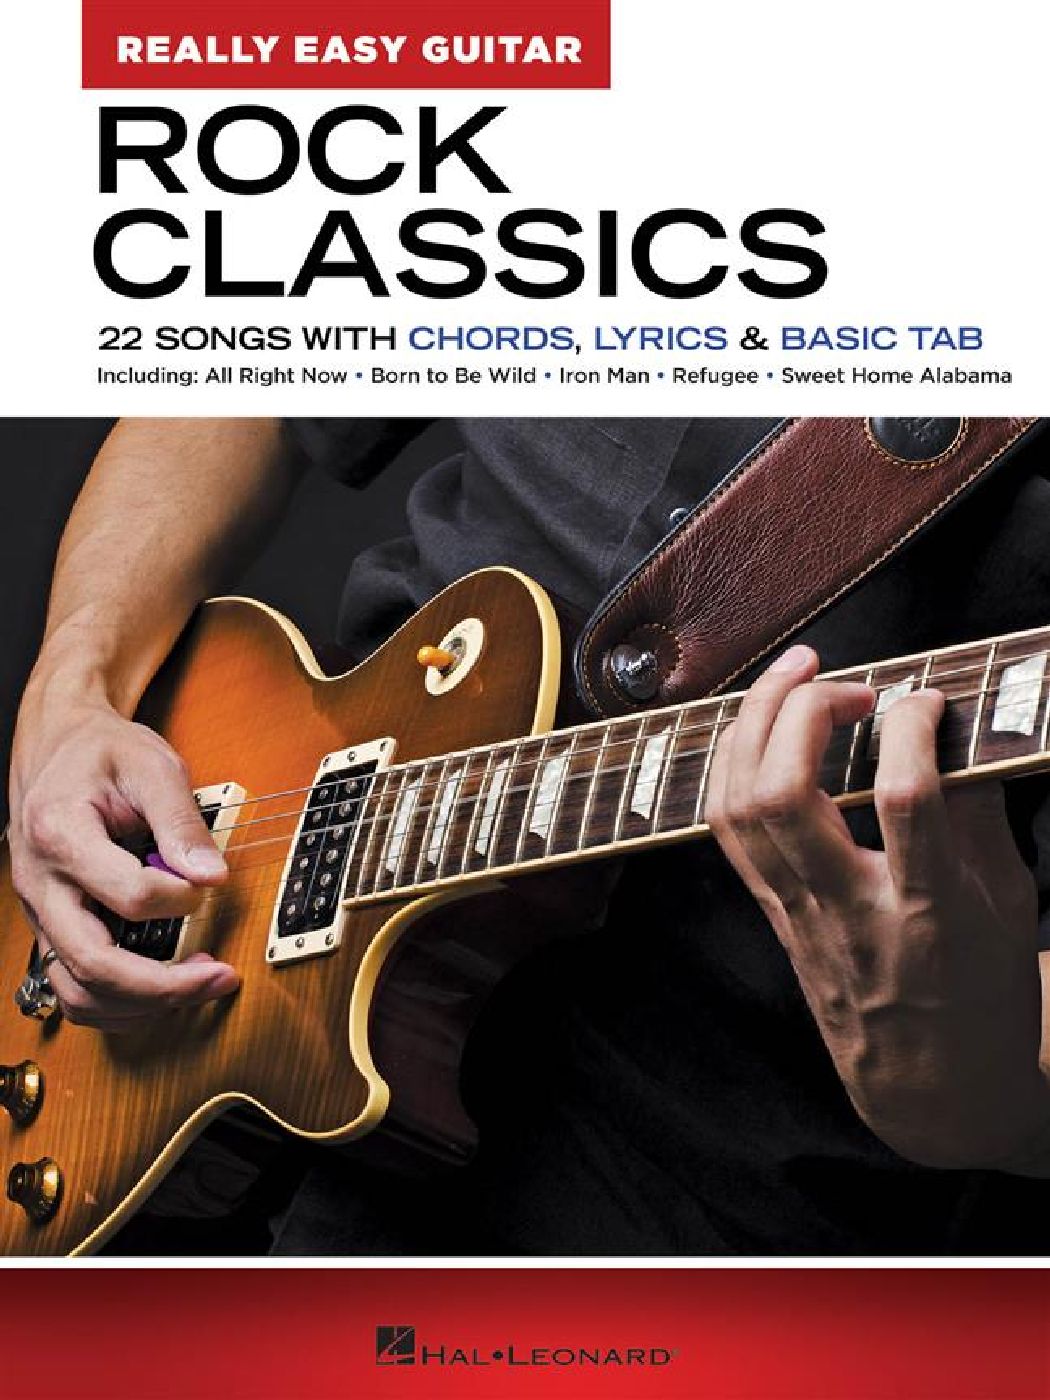 HAL LEONARD ROCK CLASSICS - REALLY EASY GUITAR SERIES